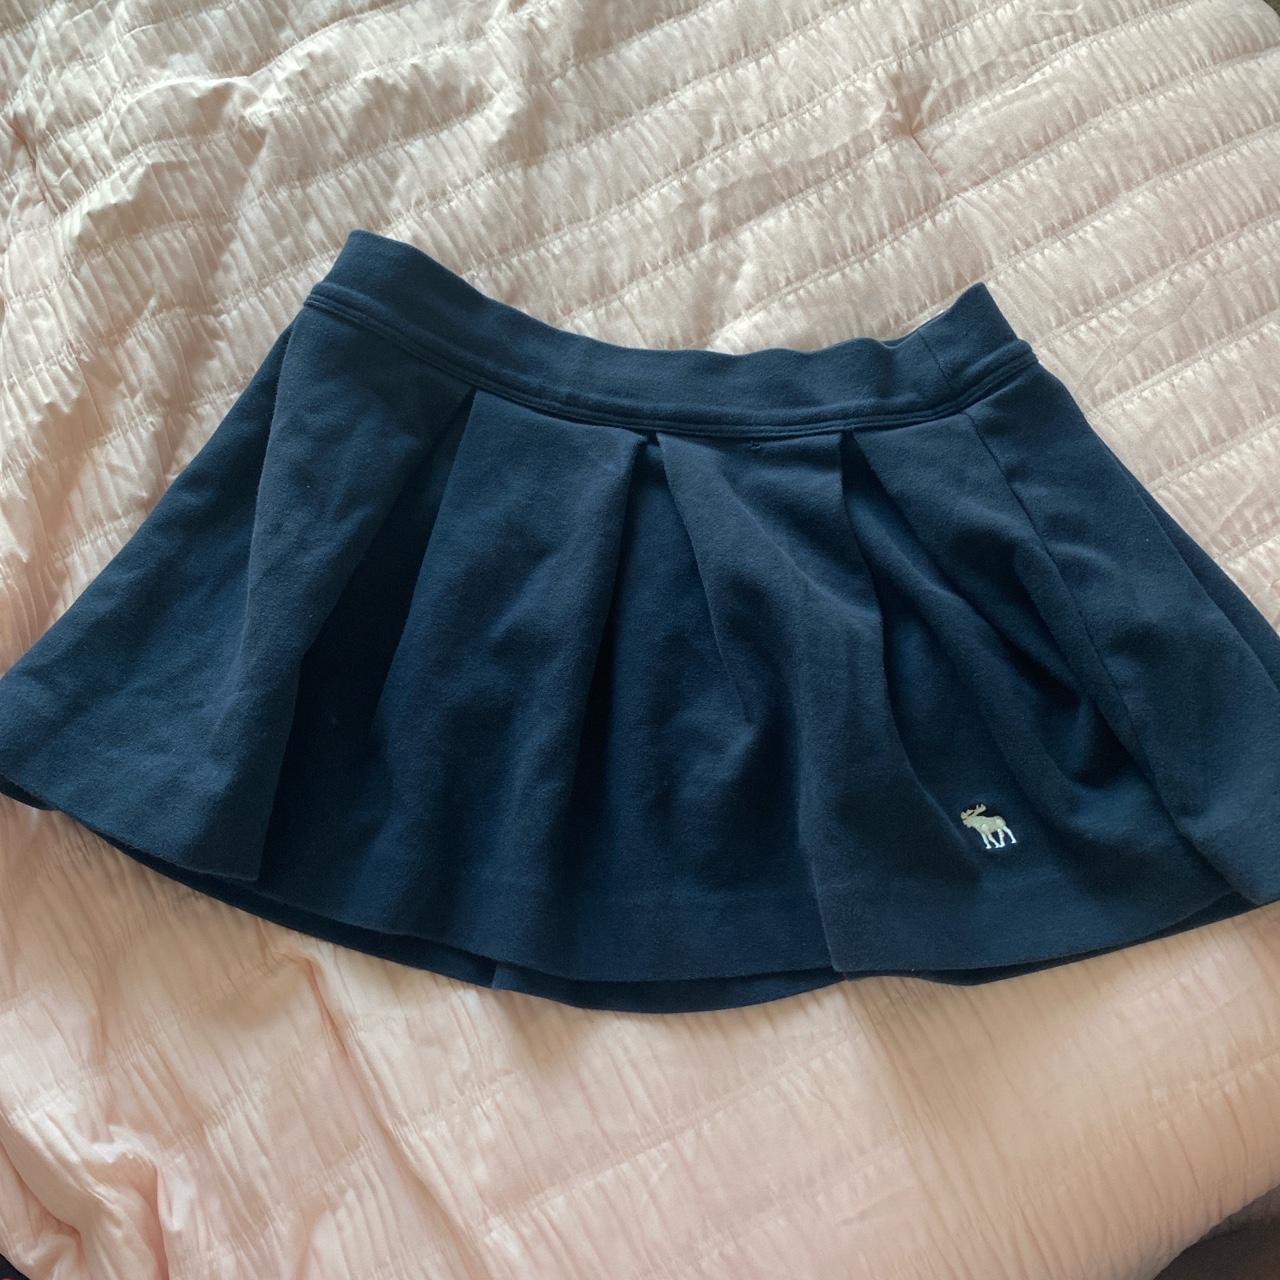 Abercrombie & Fitch Women's Navy Skirt | Depop